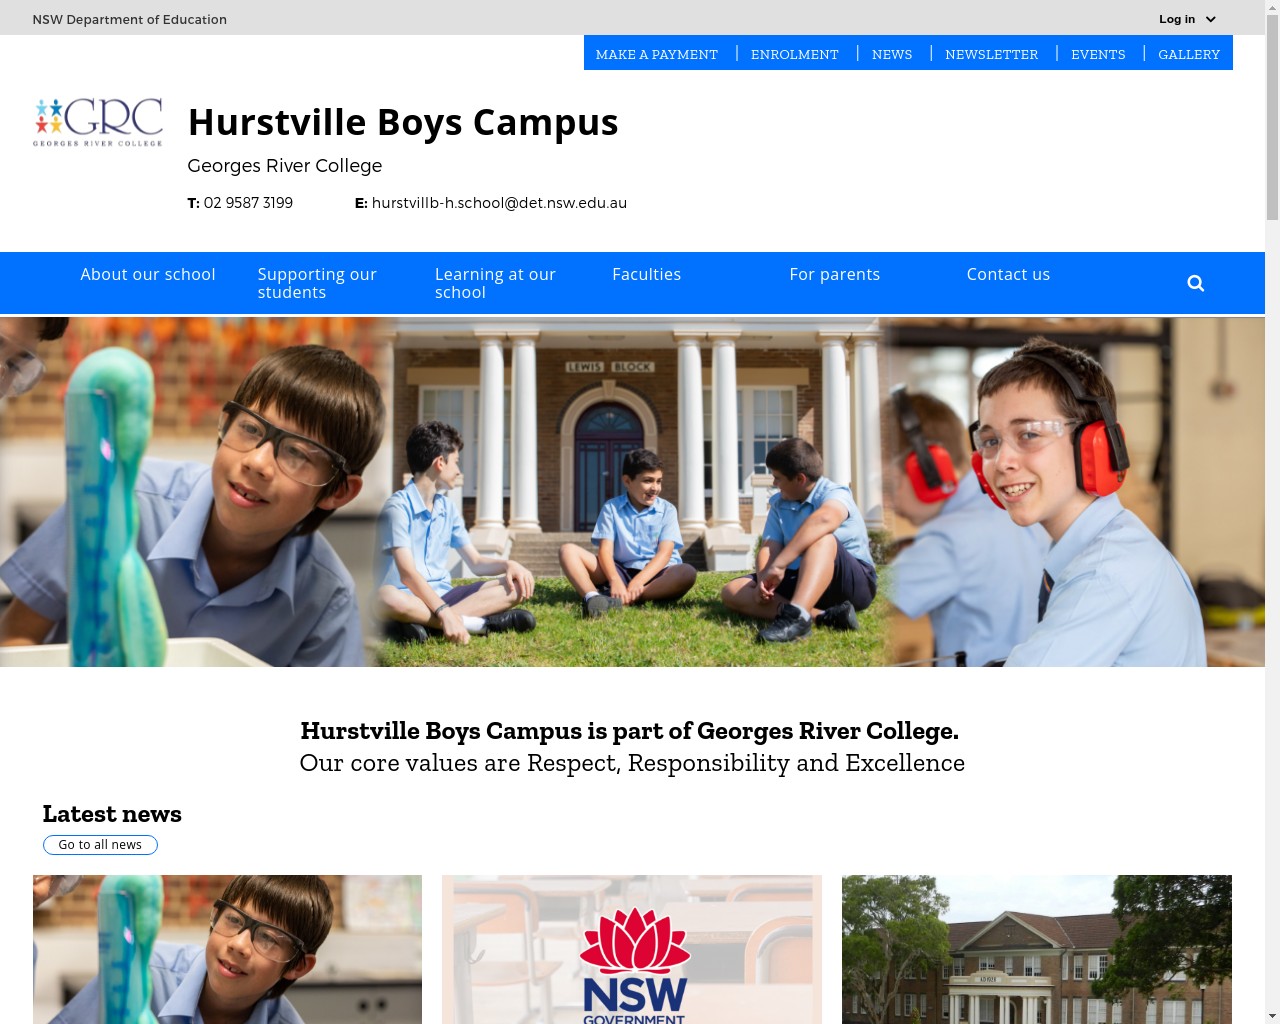 George River College Hurstville Boys Campus